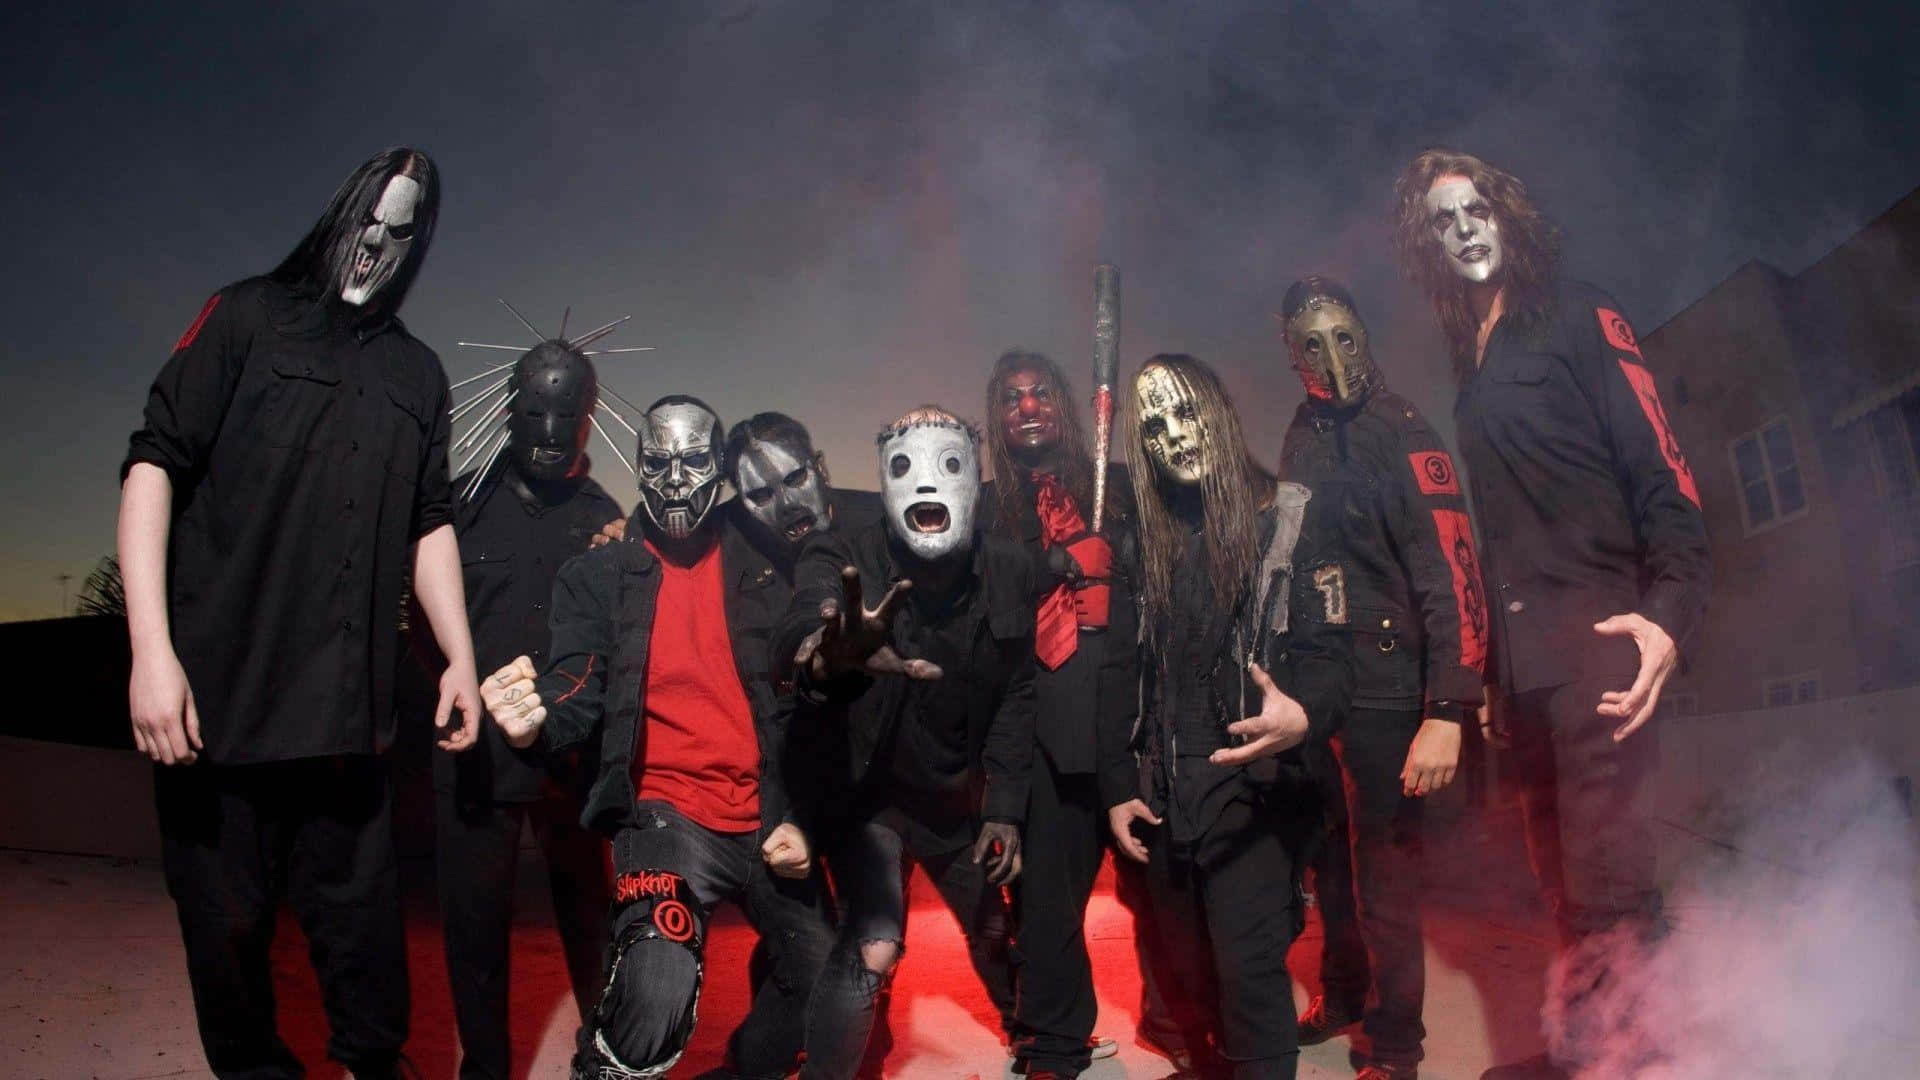 Heavy metal band Slipknot in dark attire performing on stage Wallpaper